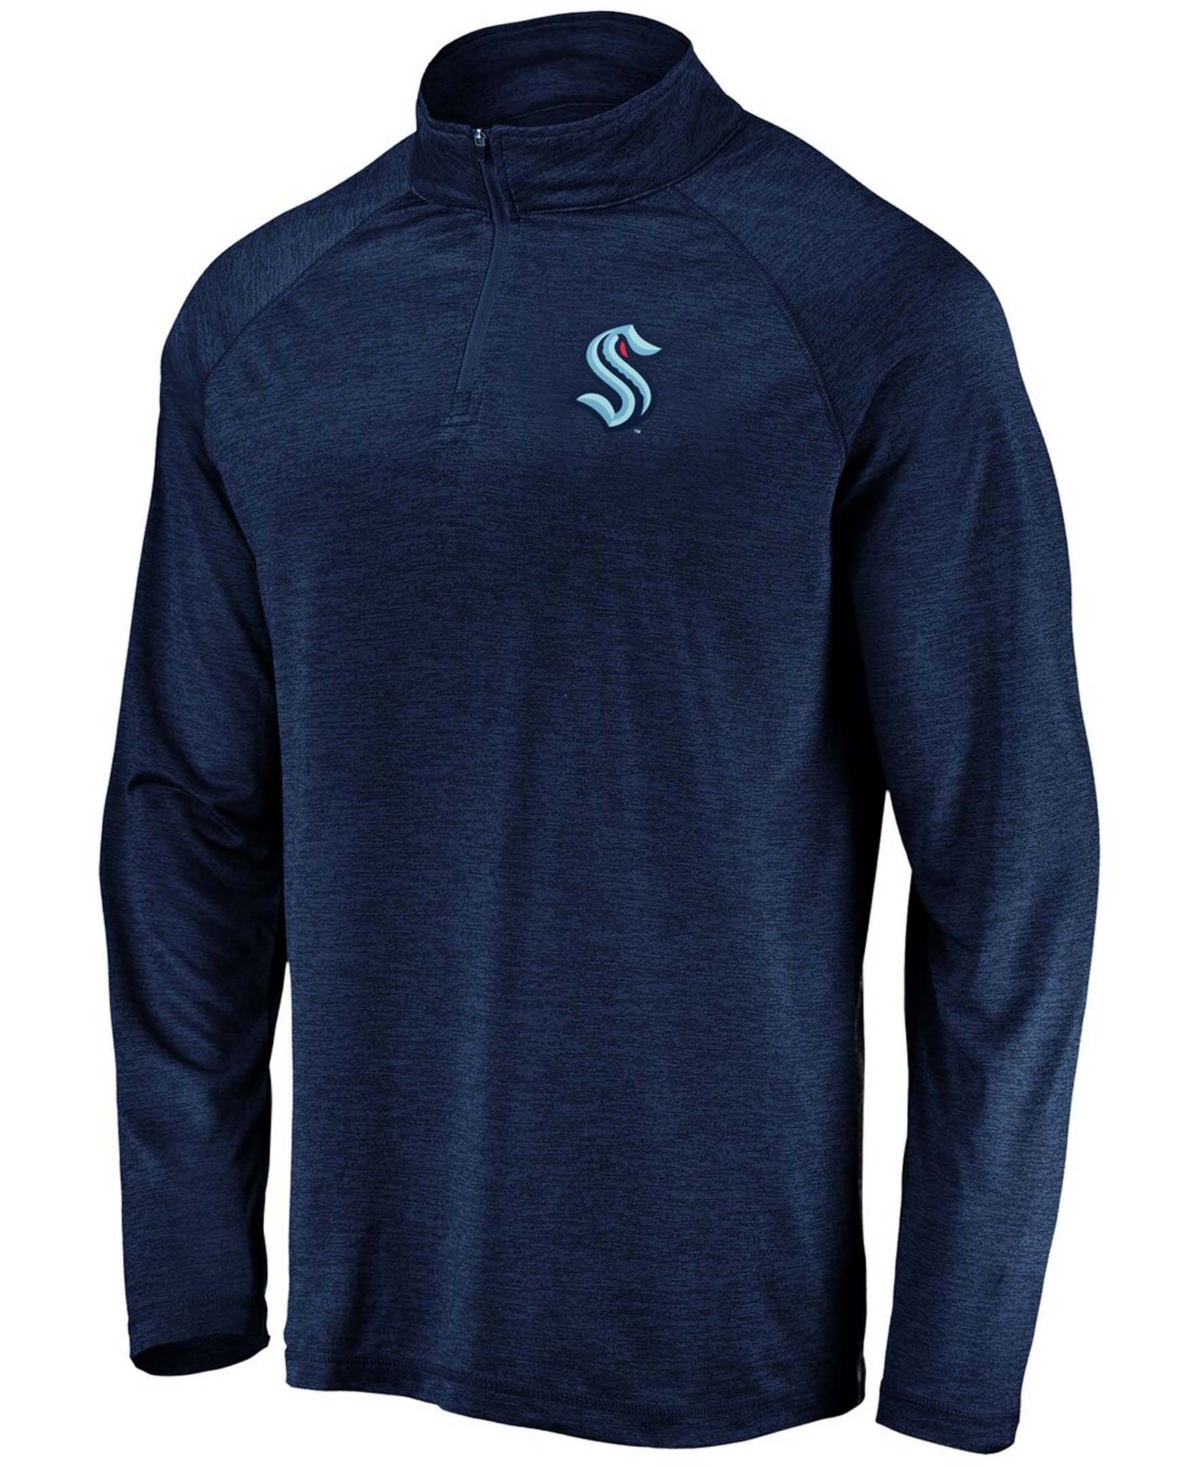 Shop Authentic Nhl Apparel Fanatics Branded Men's Navy Seattle Kraken Primary Logo Quarter-zip Pullover Fleece Jacket